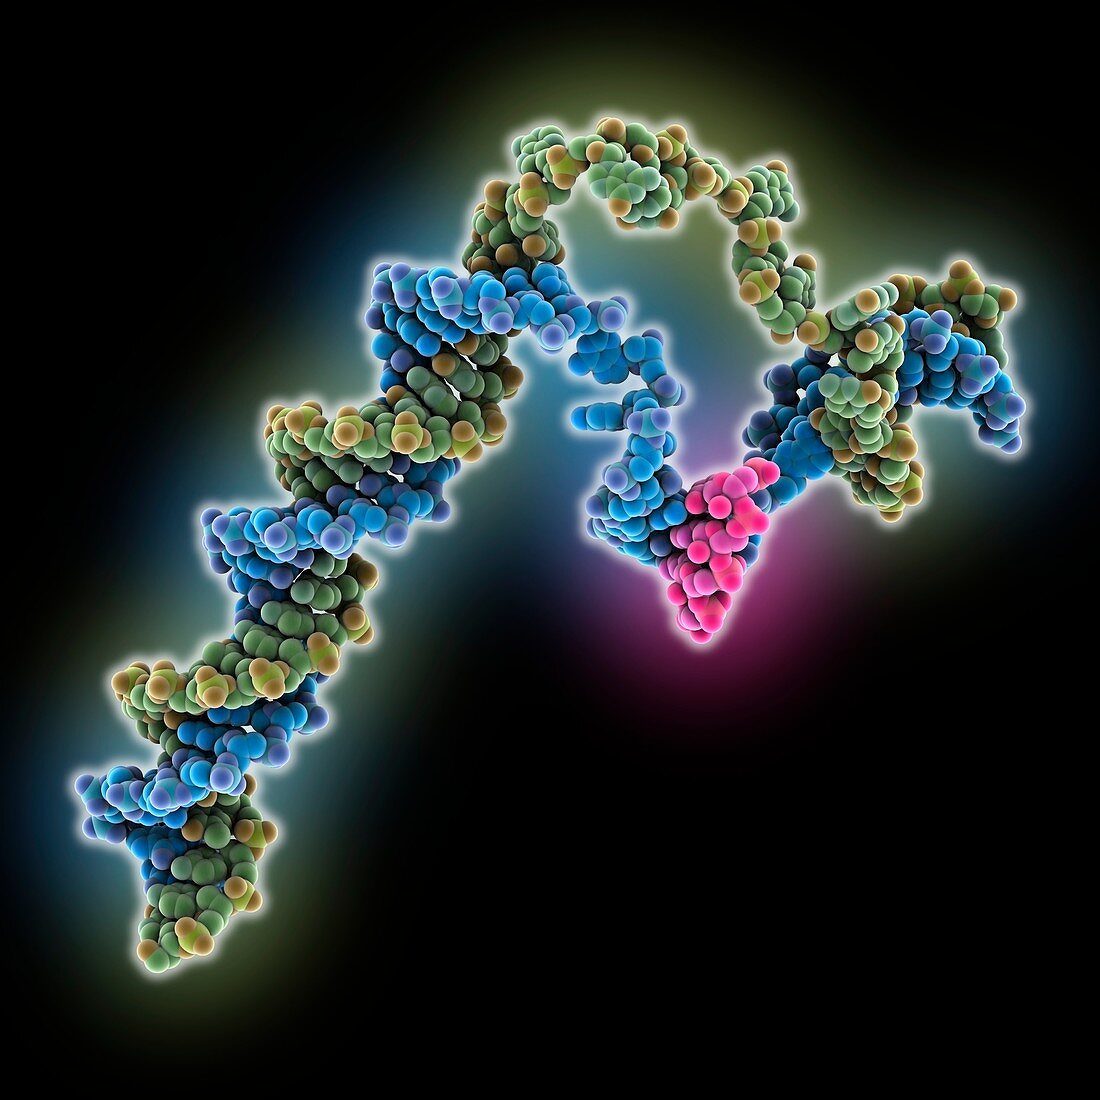 RNAP-promoter transcribing complex, molecular model